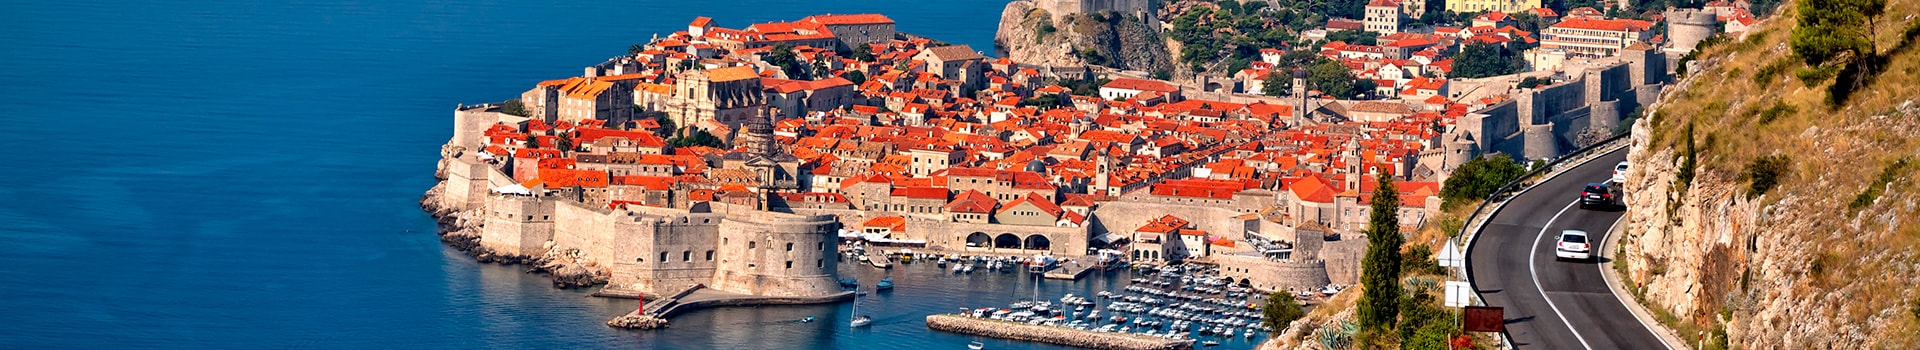 Milão - Dubrovnik